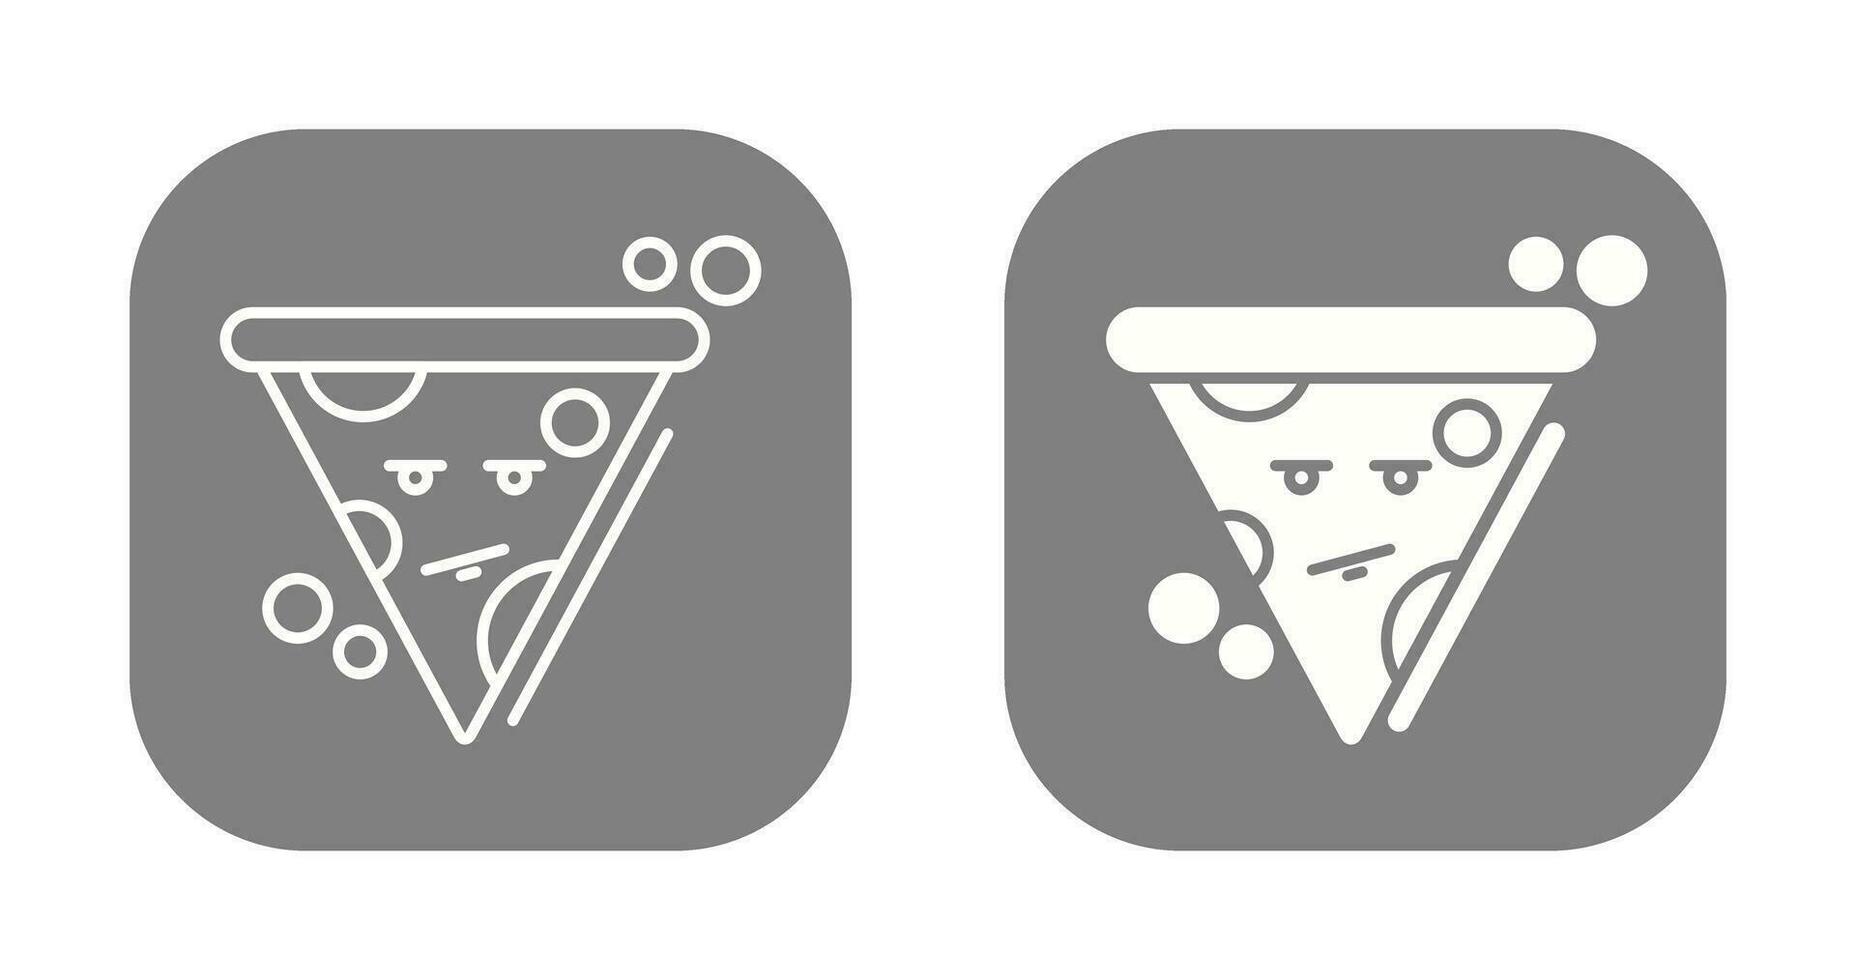 ícone de vetor de pizza